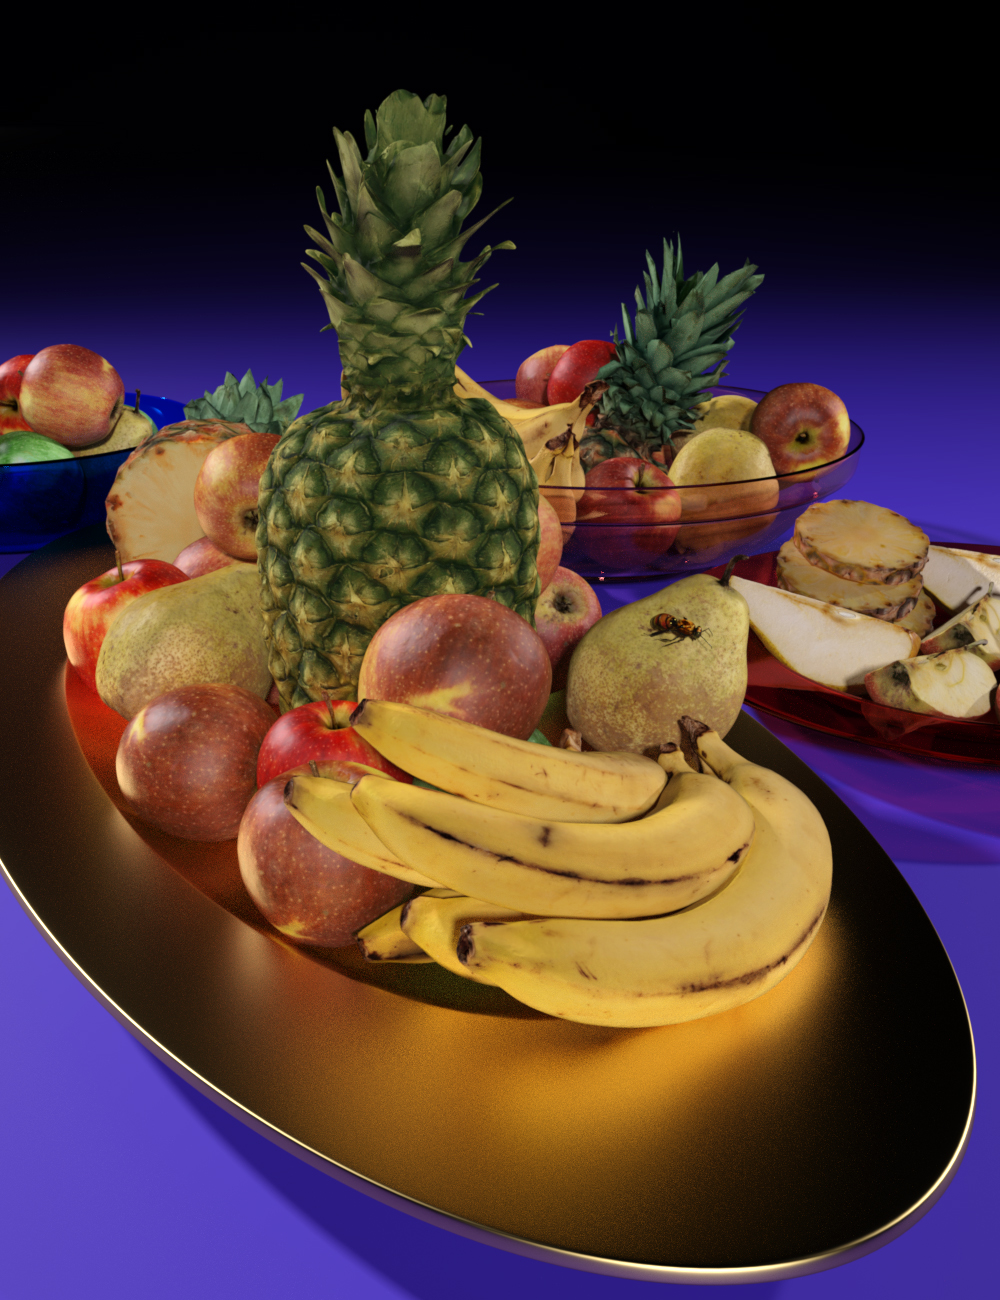 Still Life with Fruits by: dobit, 3D Models by Daz 3D